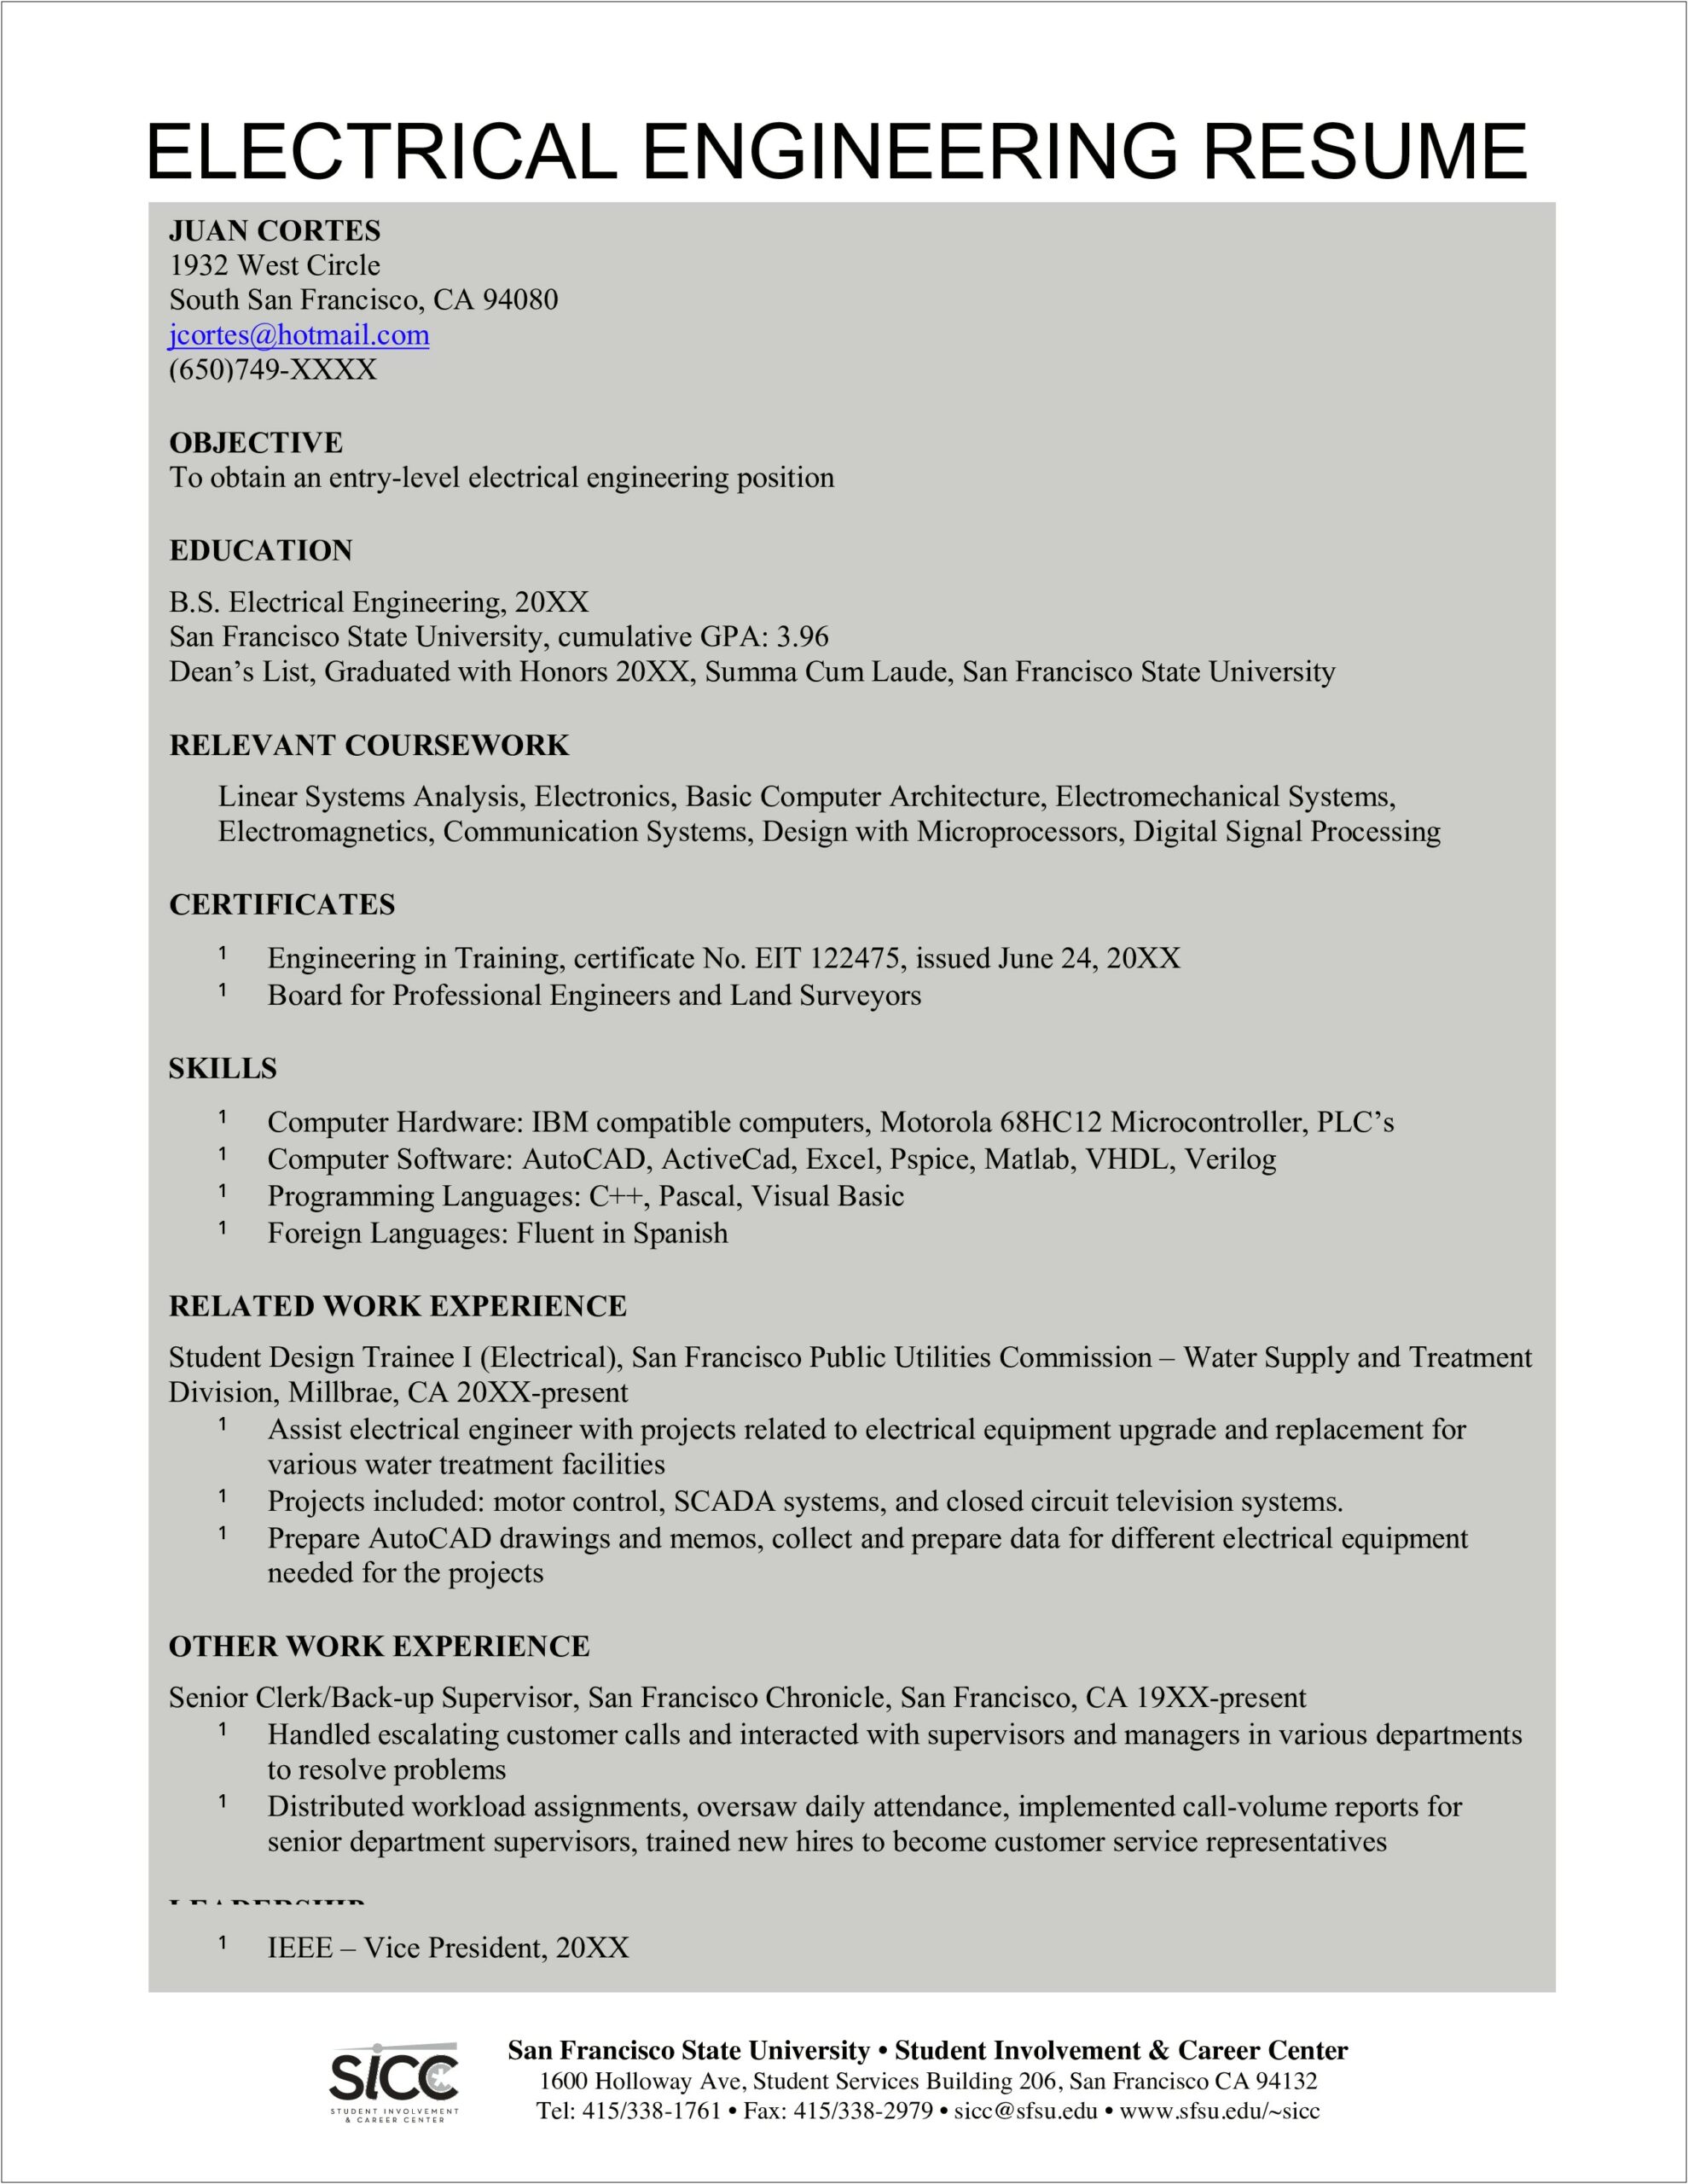 Electrical Engineer Job Description For Resume